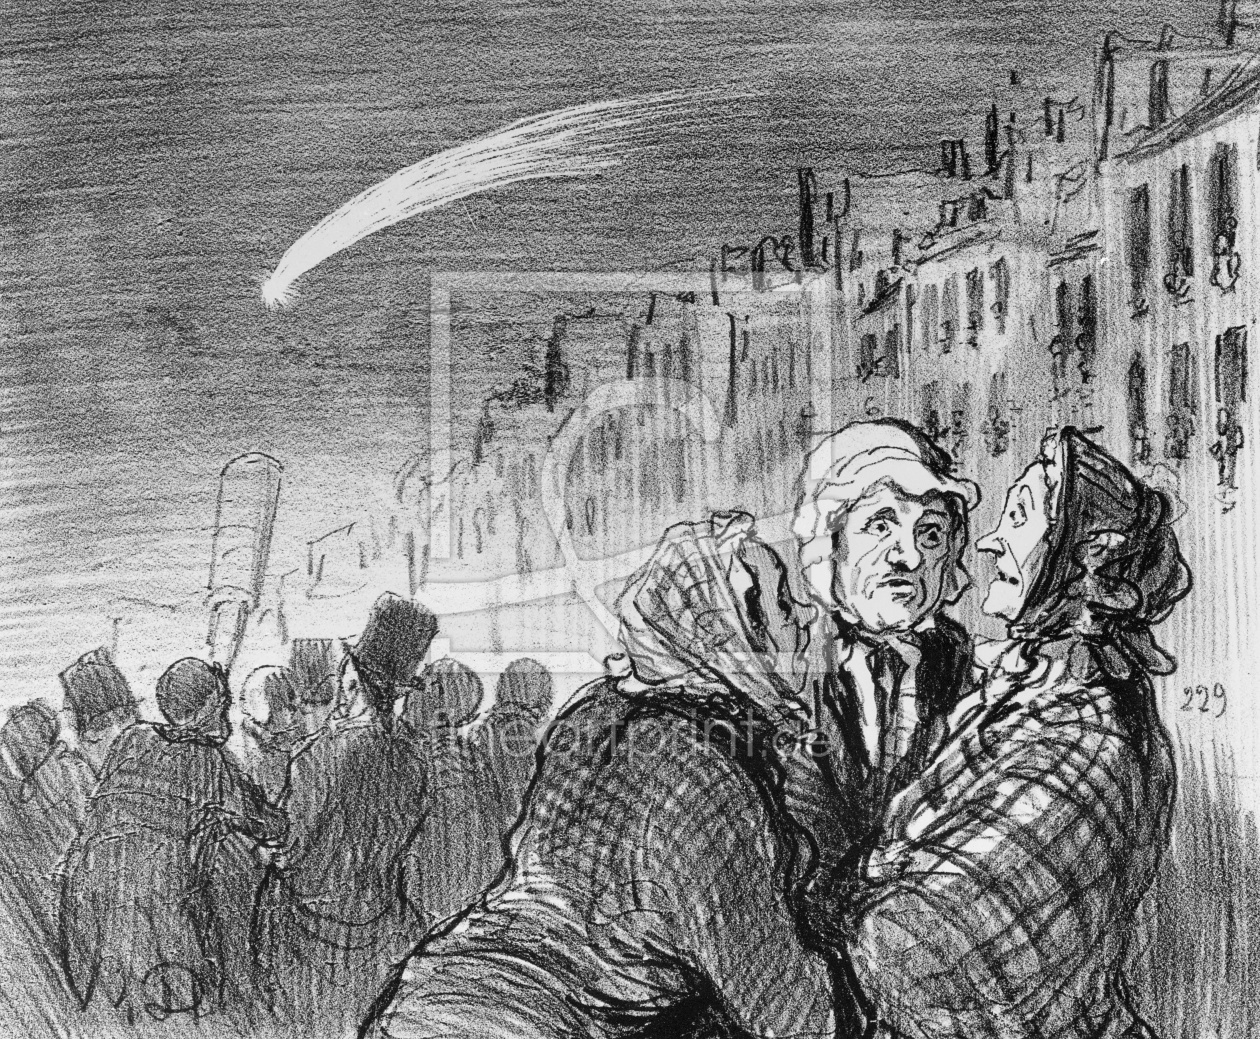 Bild-Nr.: 31001618 Series 'Actualites', Ah! yes those comets they always predict great misfortunes, erstellt von Daumier, Honore